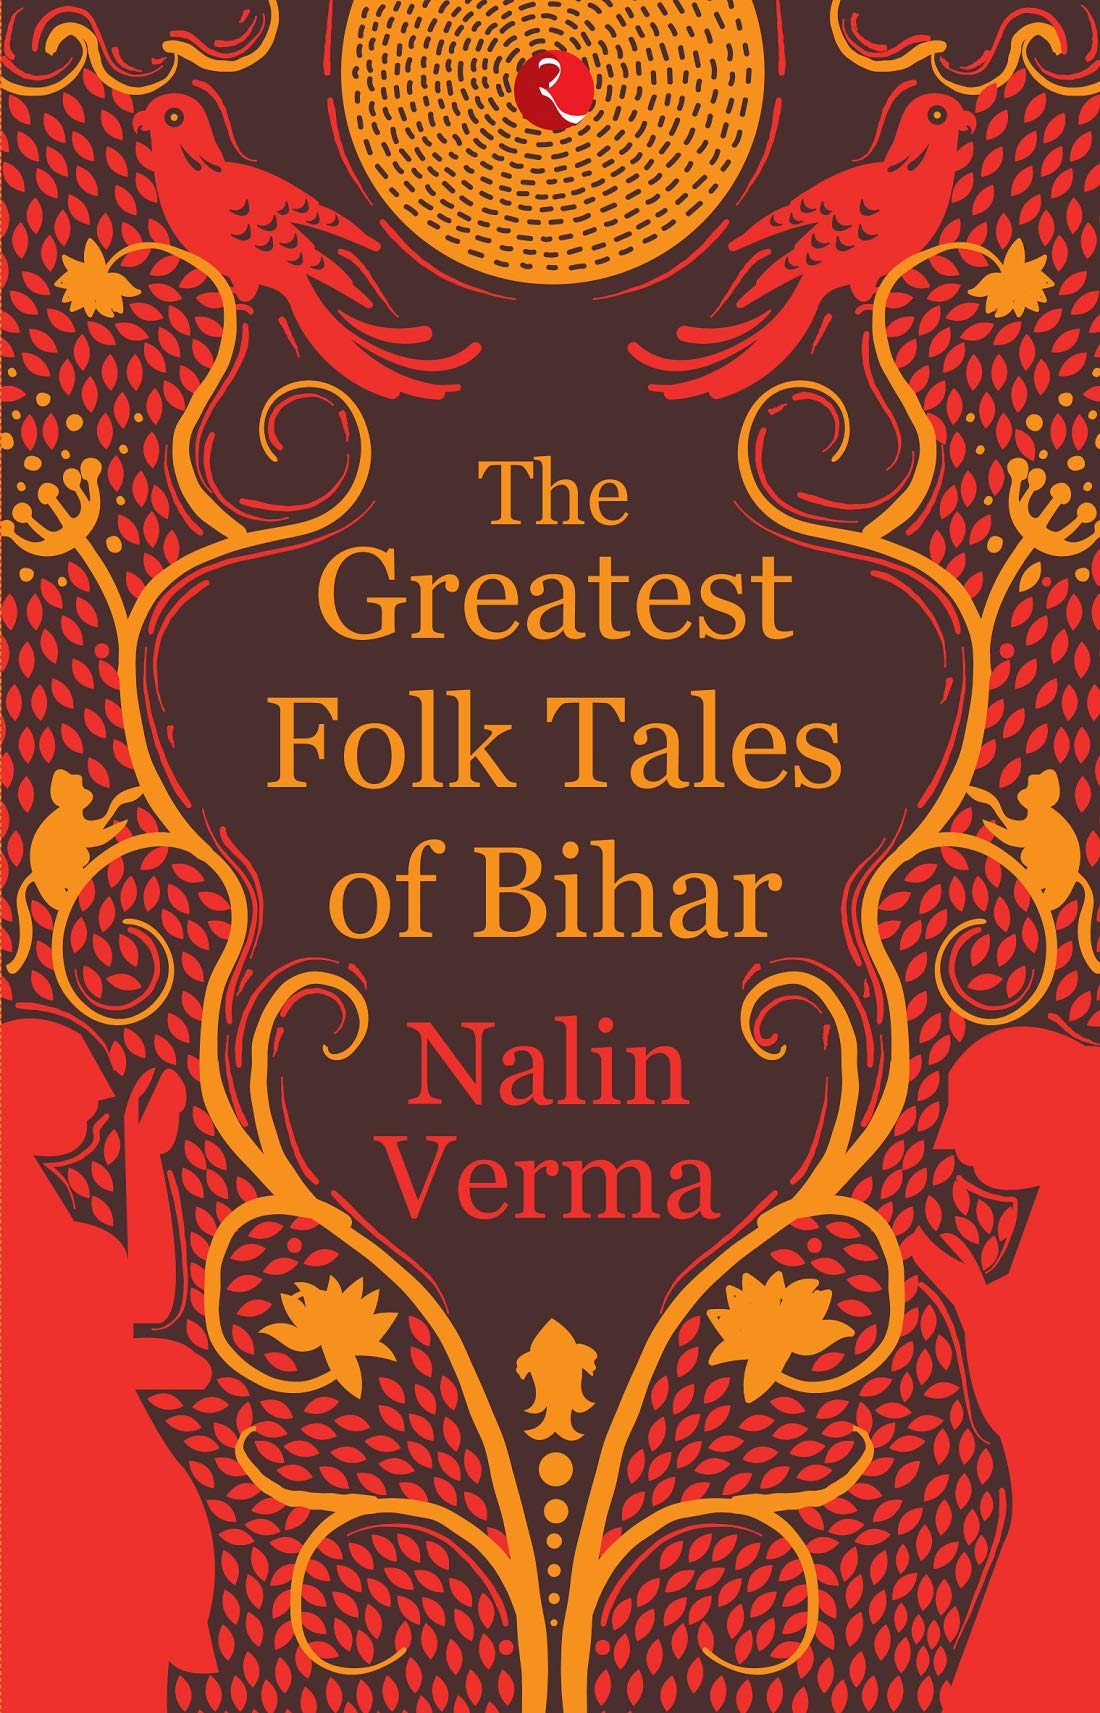 ‘The Greatest Folk Tales of Bihar’ by Nalin Verma.